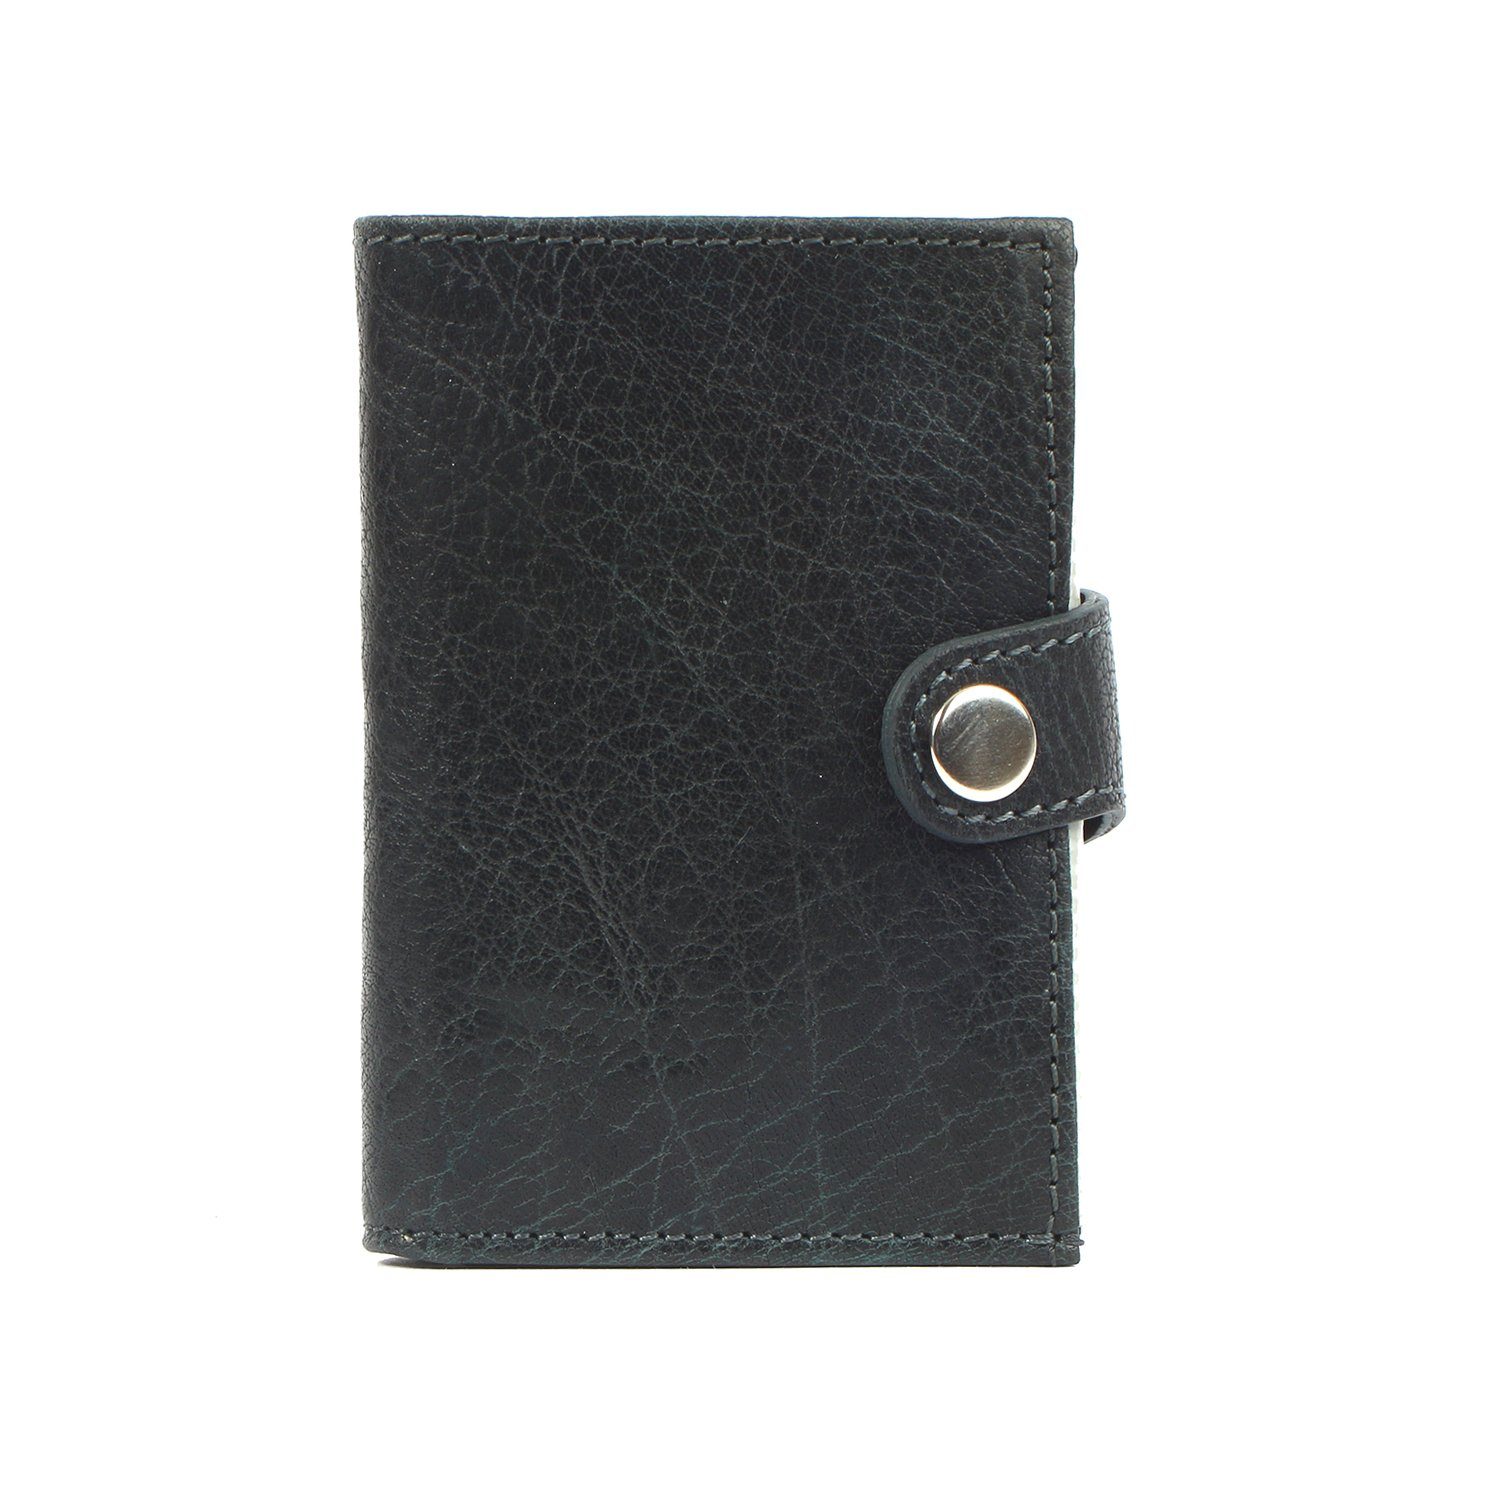 Margelisch Mini Geldbörse noonyu single Kreditkartenbörse Upcycling steelblue Leder aus leather